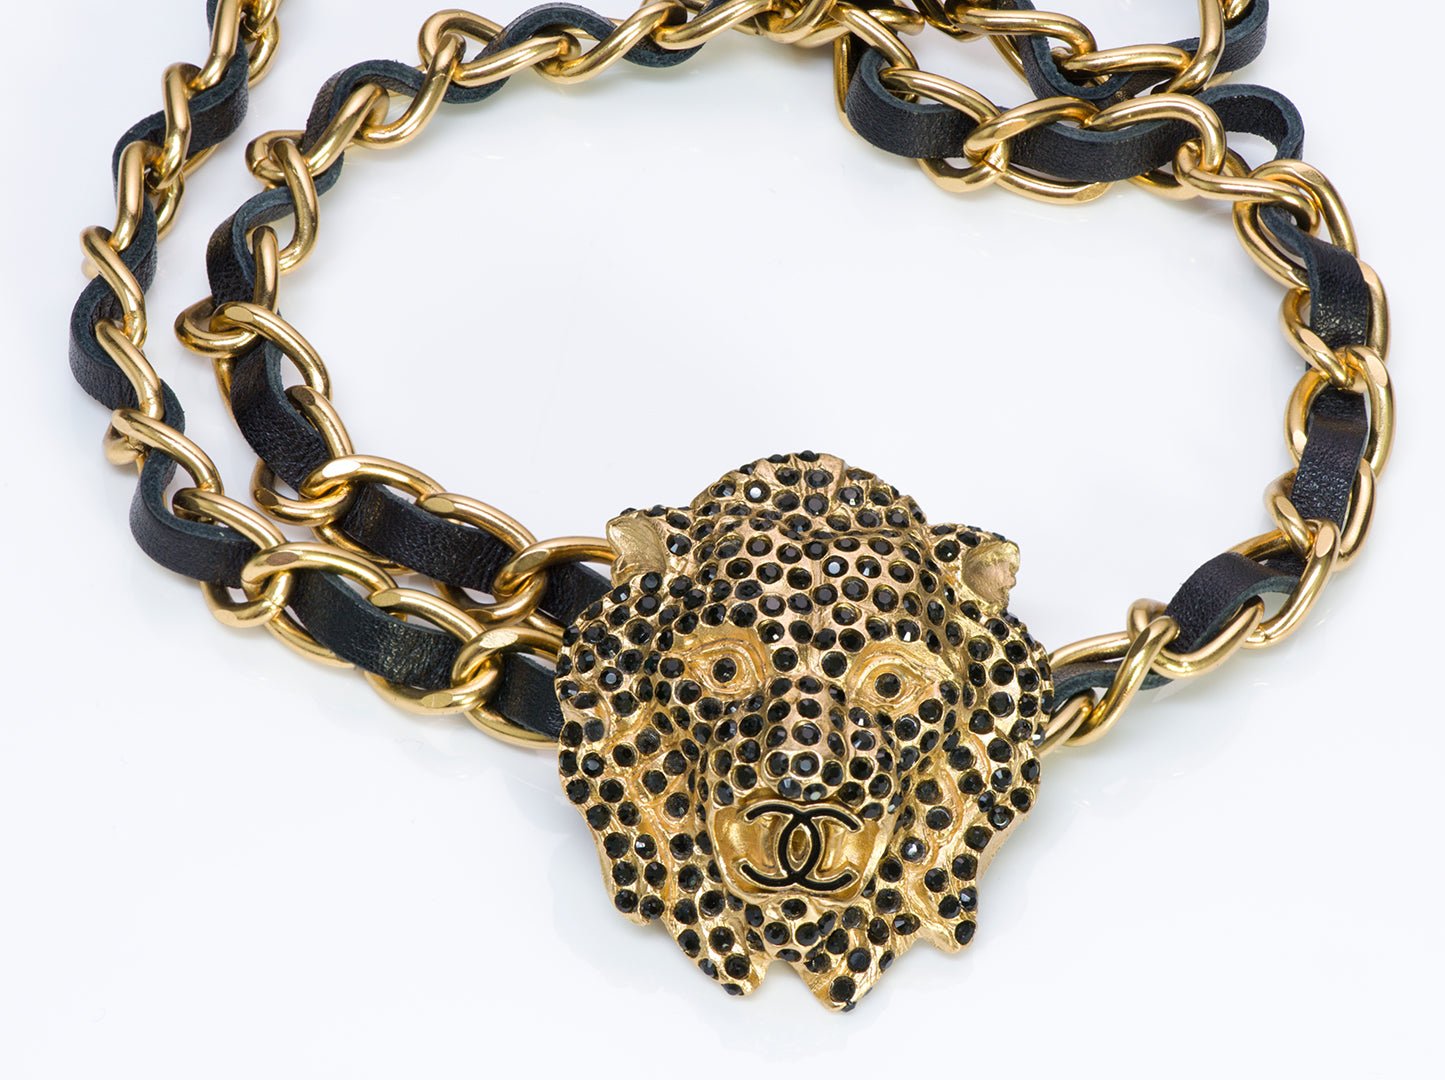 Chanel CC 2001 Black Crystal Lion Leather Chain Belt